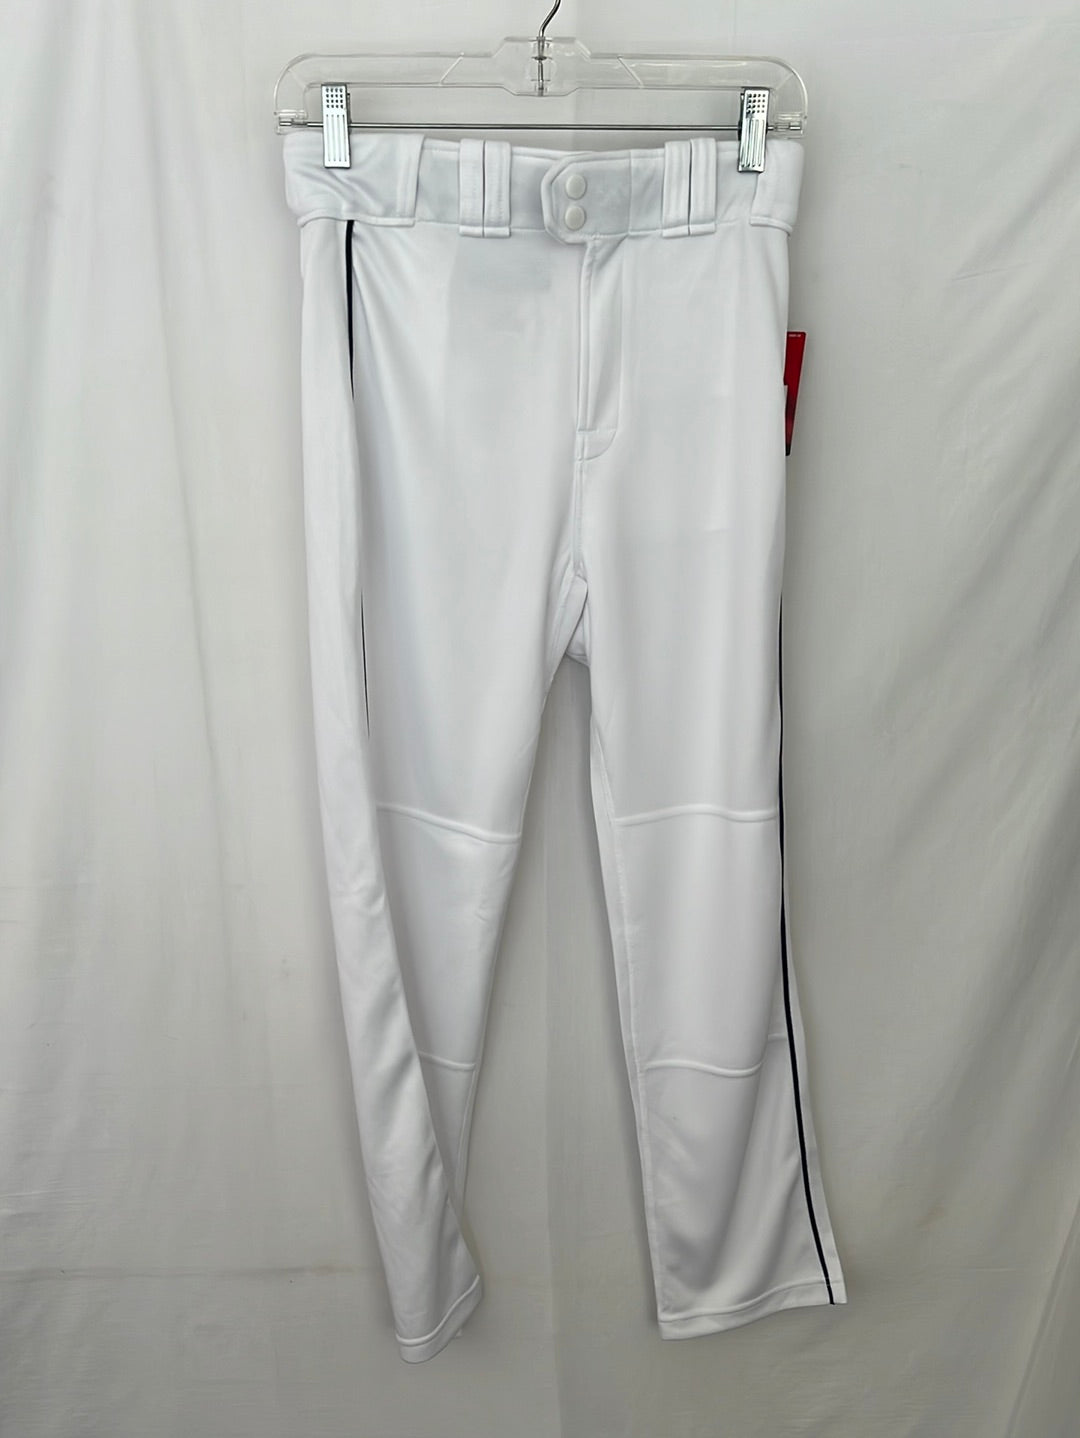 NWT -- RAWLINGS White Semi-Relaxed Fit Youth Baseball Pants -- XL